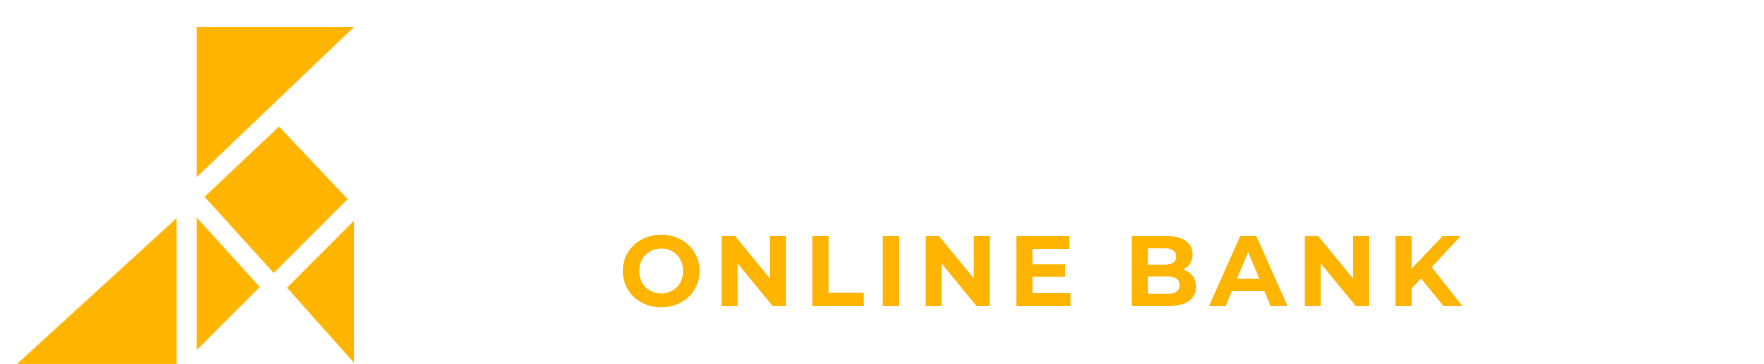 Western Joint Online